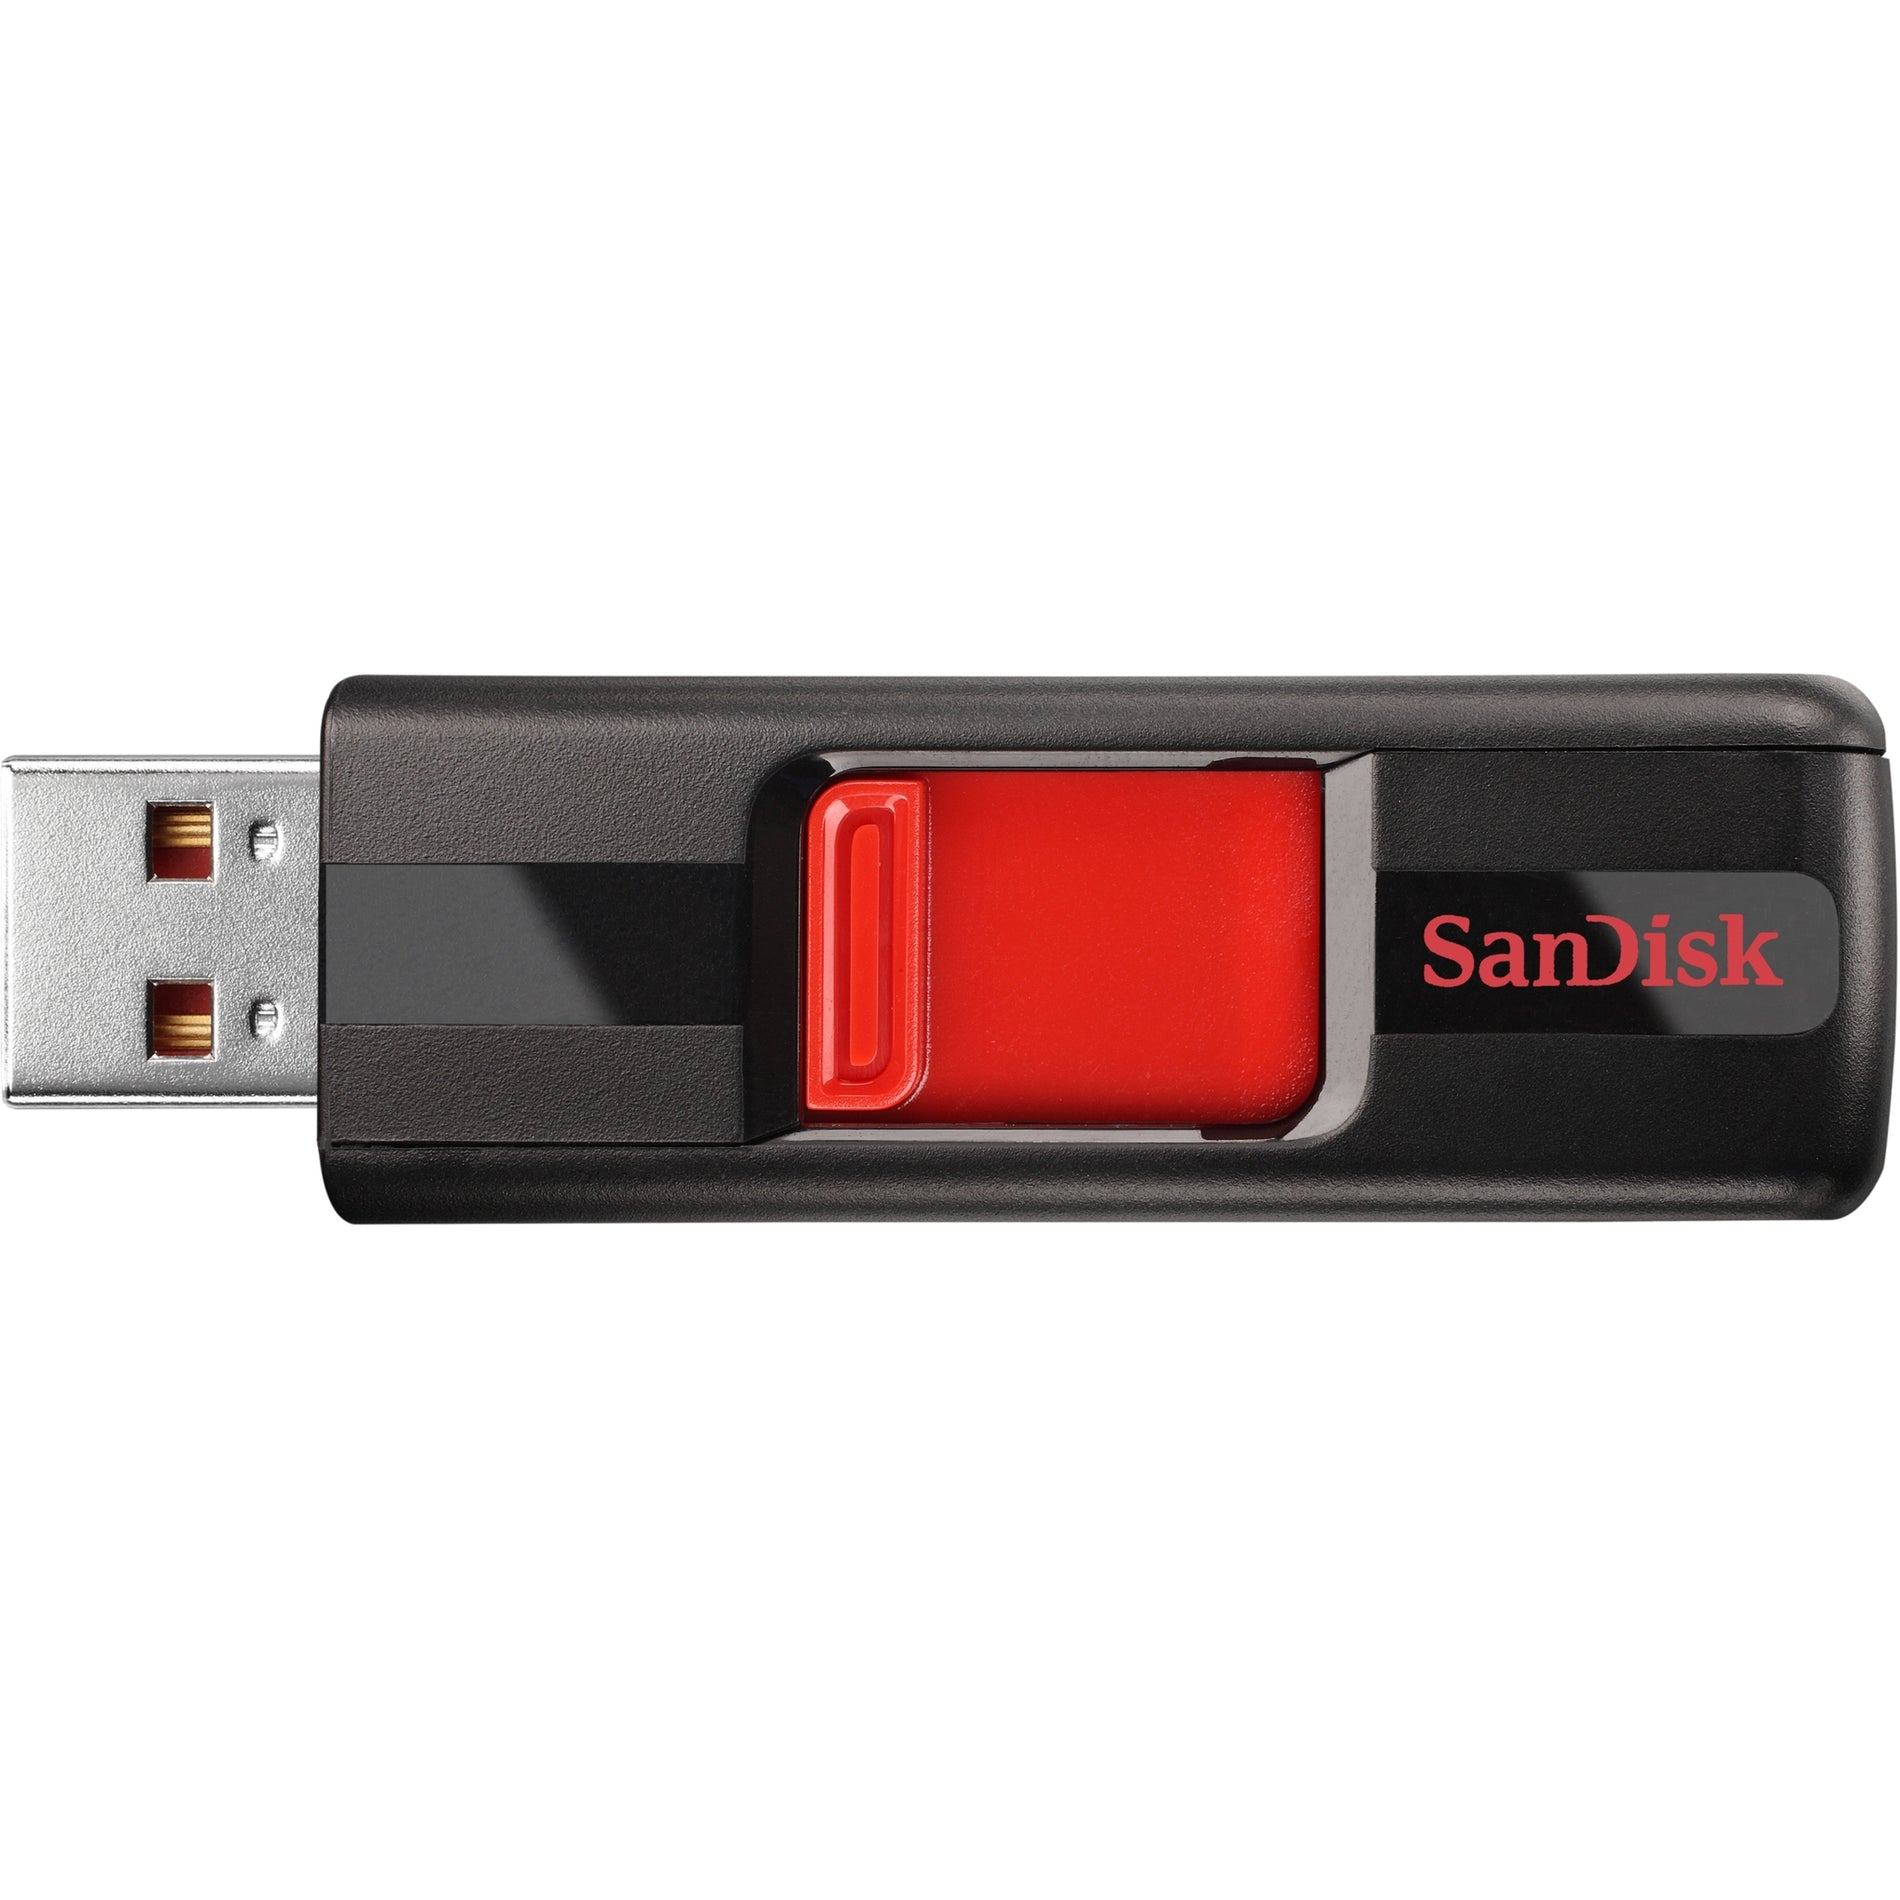 SanDisk SDCZ36-016G-B35 16GB Cruzer USB 2.0 Flash Drive, Portable and Reliable Storage